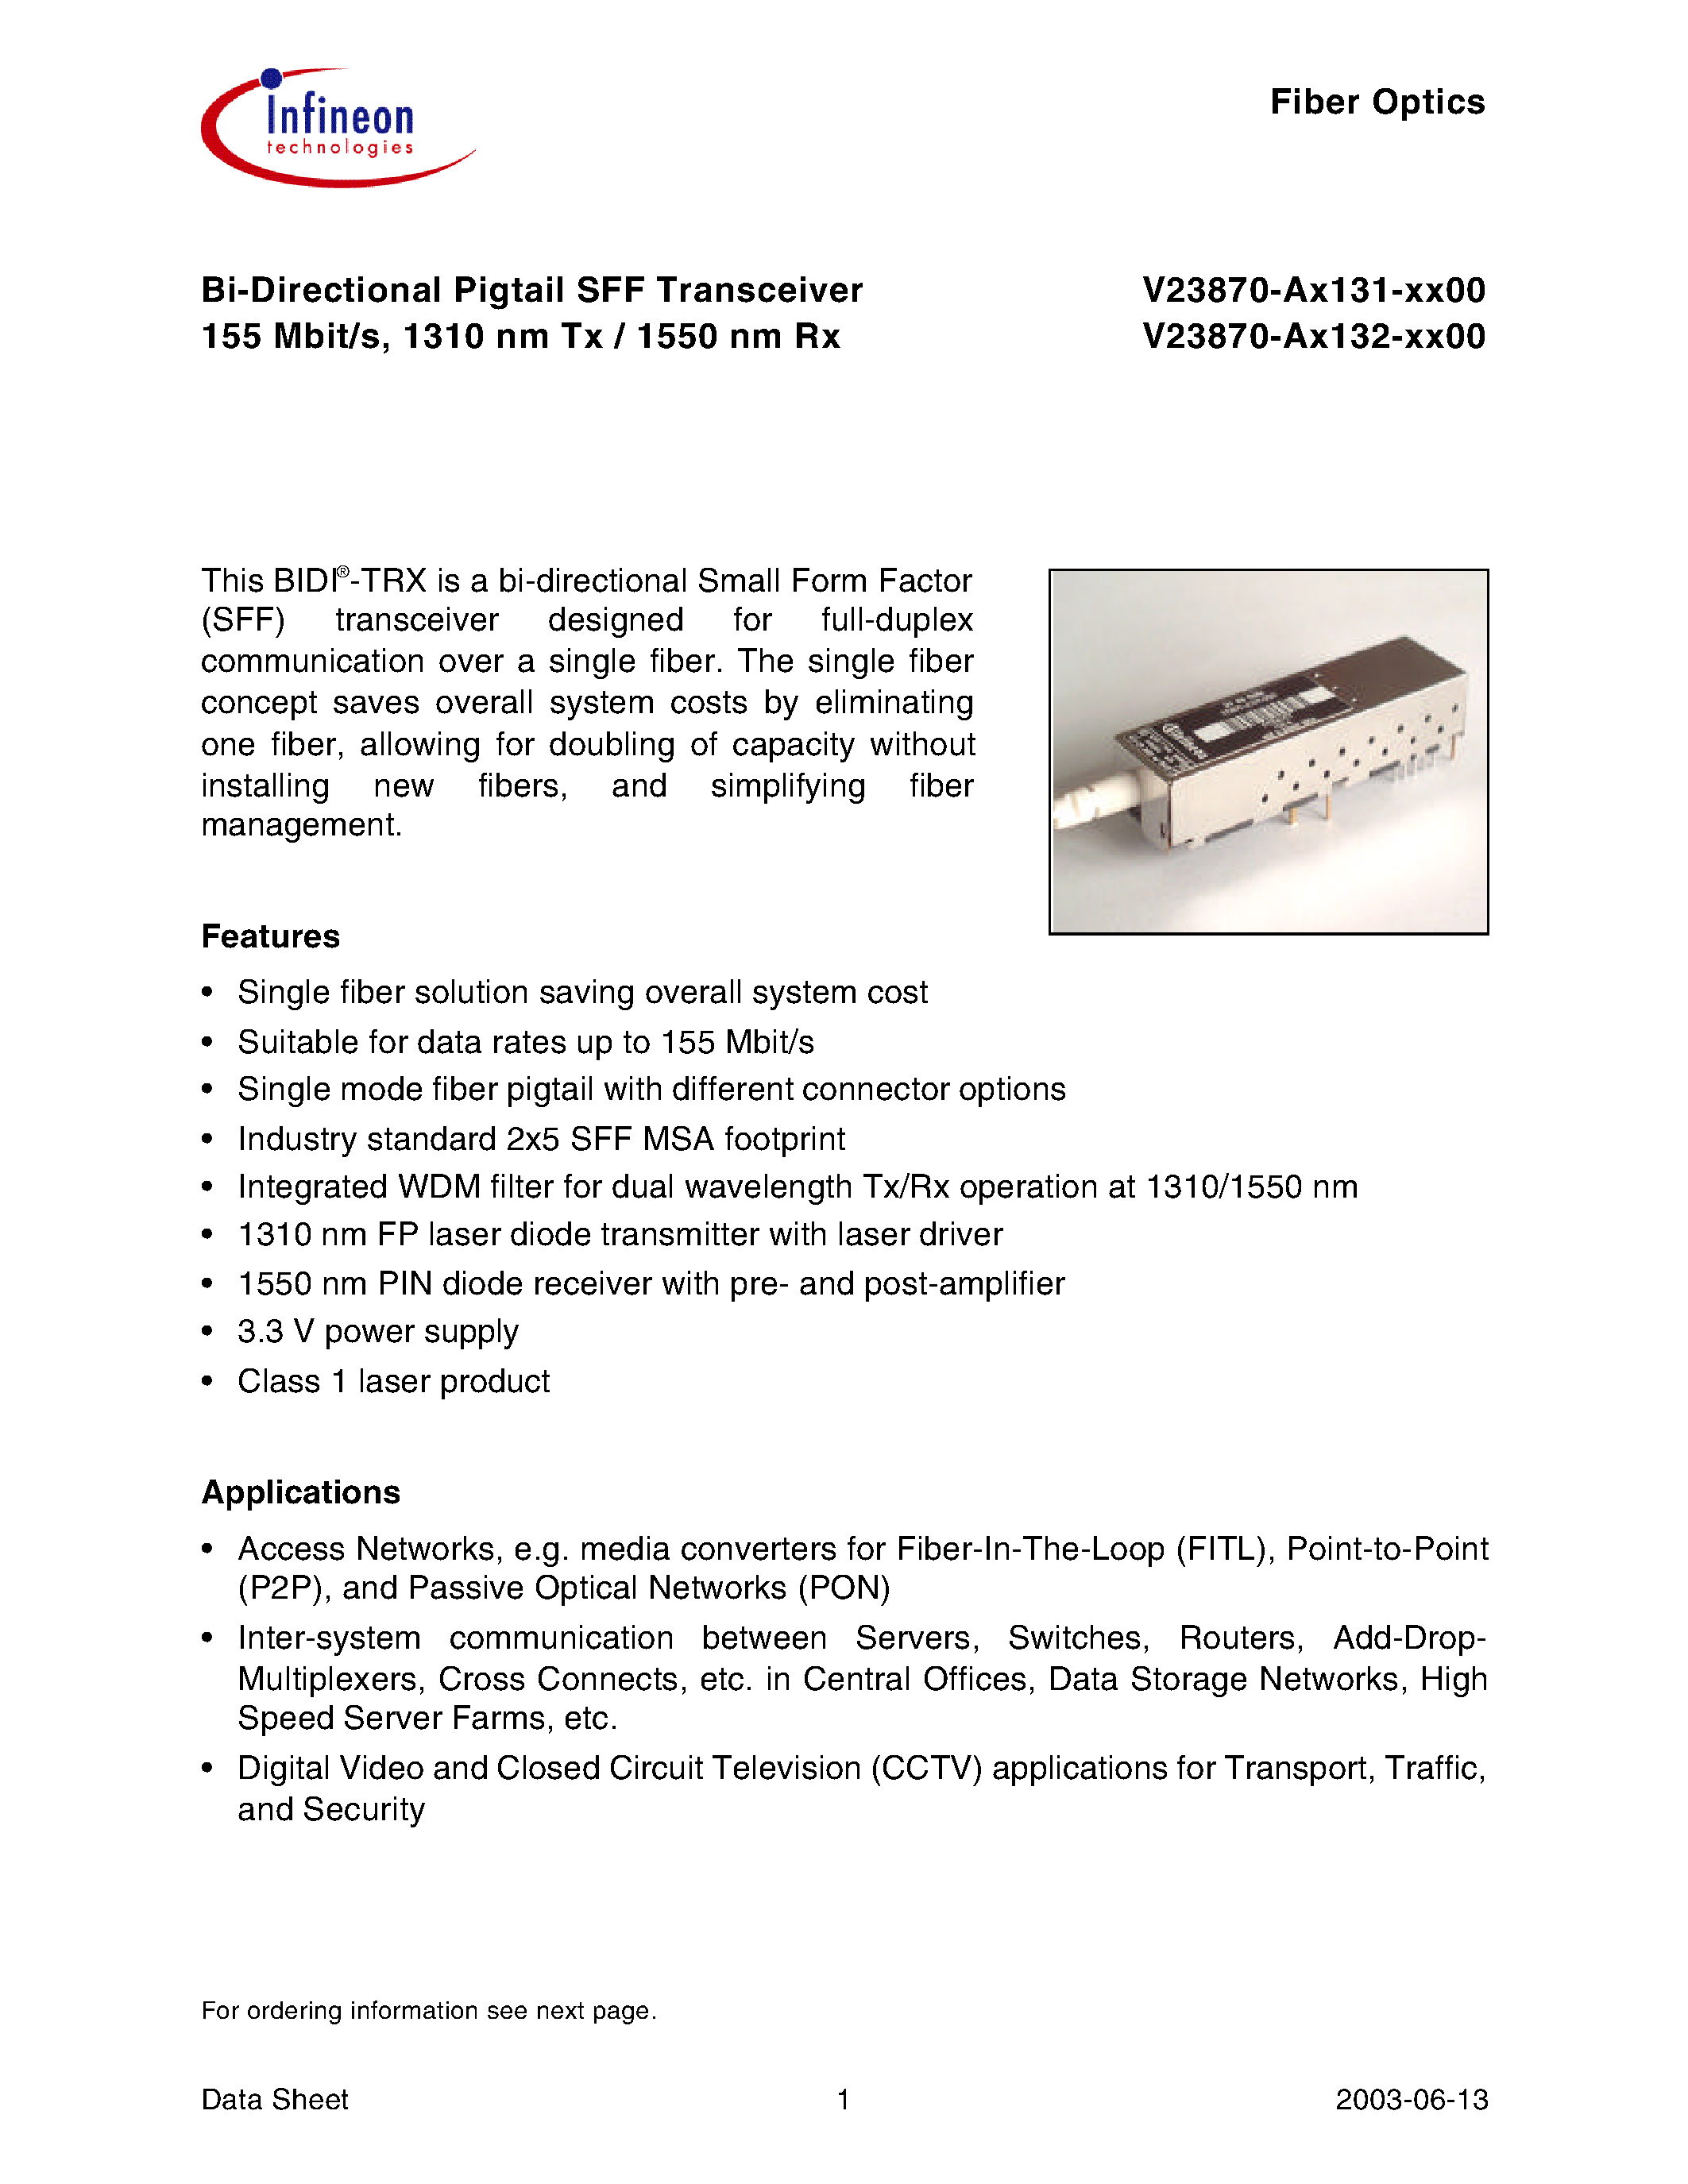 Даташит V23870-A3132-K200 - Bi-Directional Pigtail SFF Transceiver 155 Mbit/s/ 1310 nm Tx / 1550 nm Rx страница 1